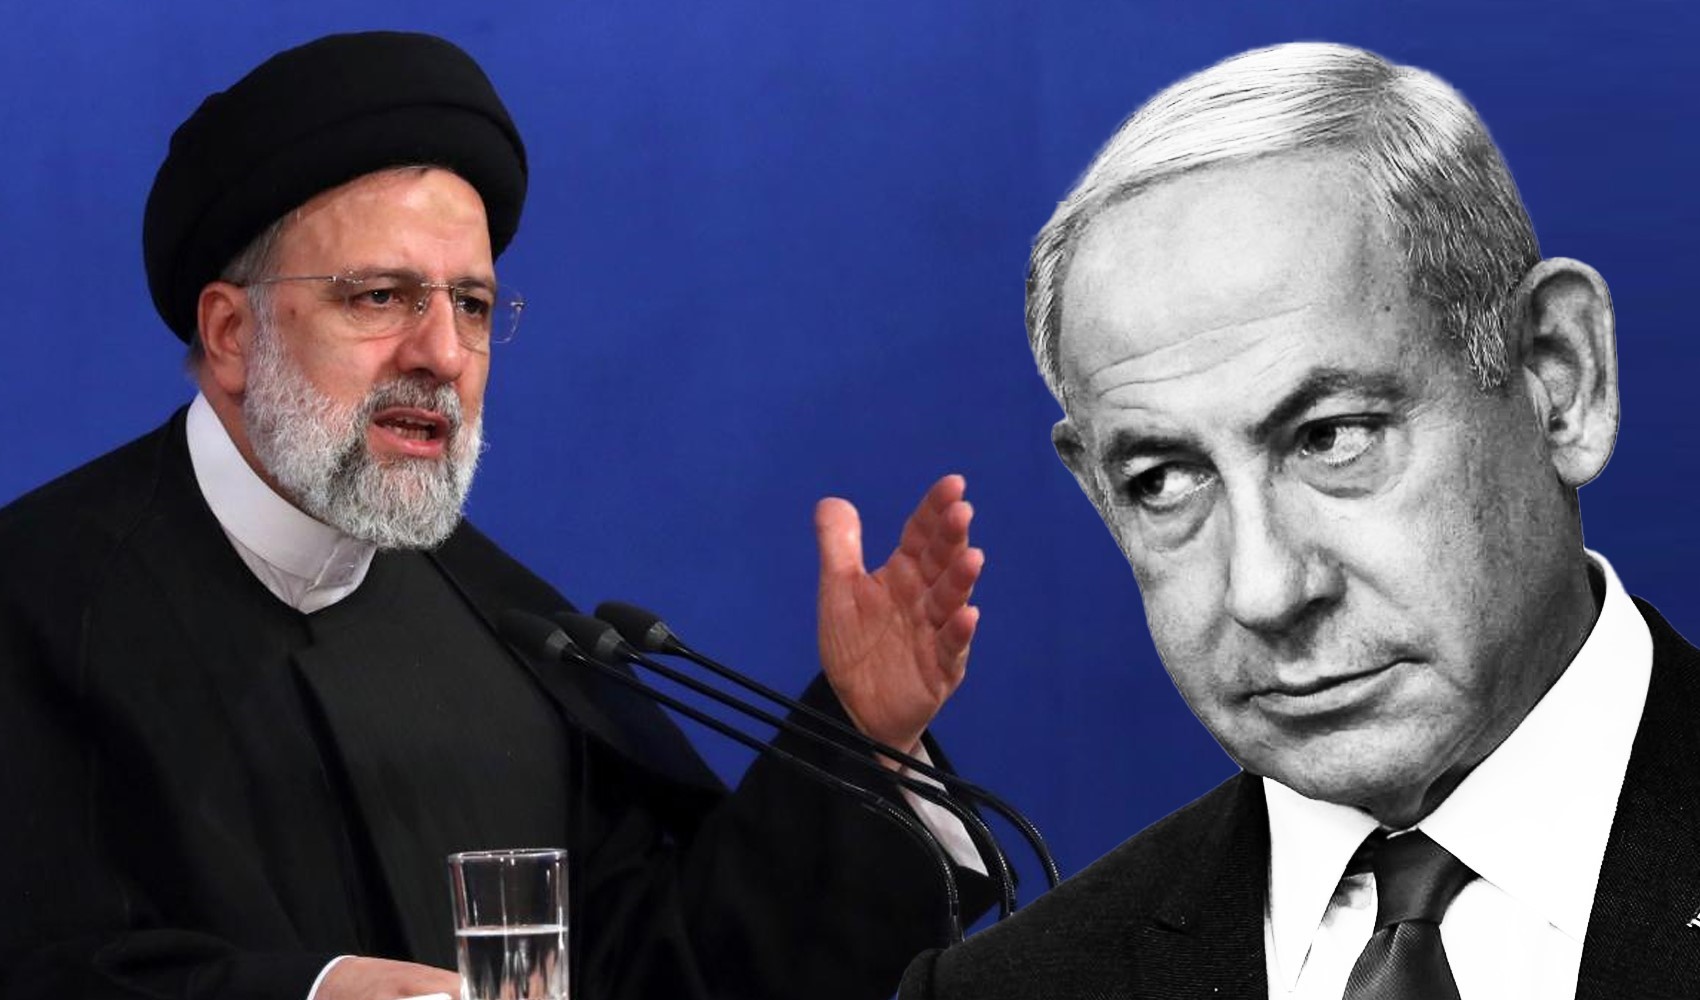 İsrail'den İran'a misilleme saldırısı!